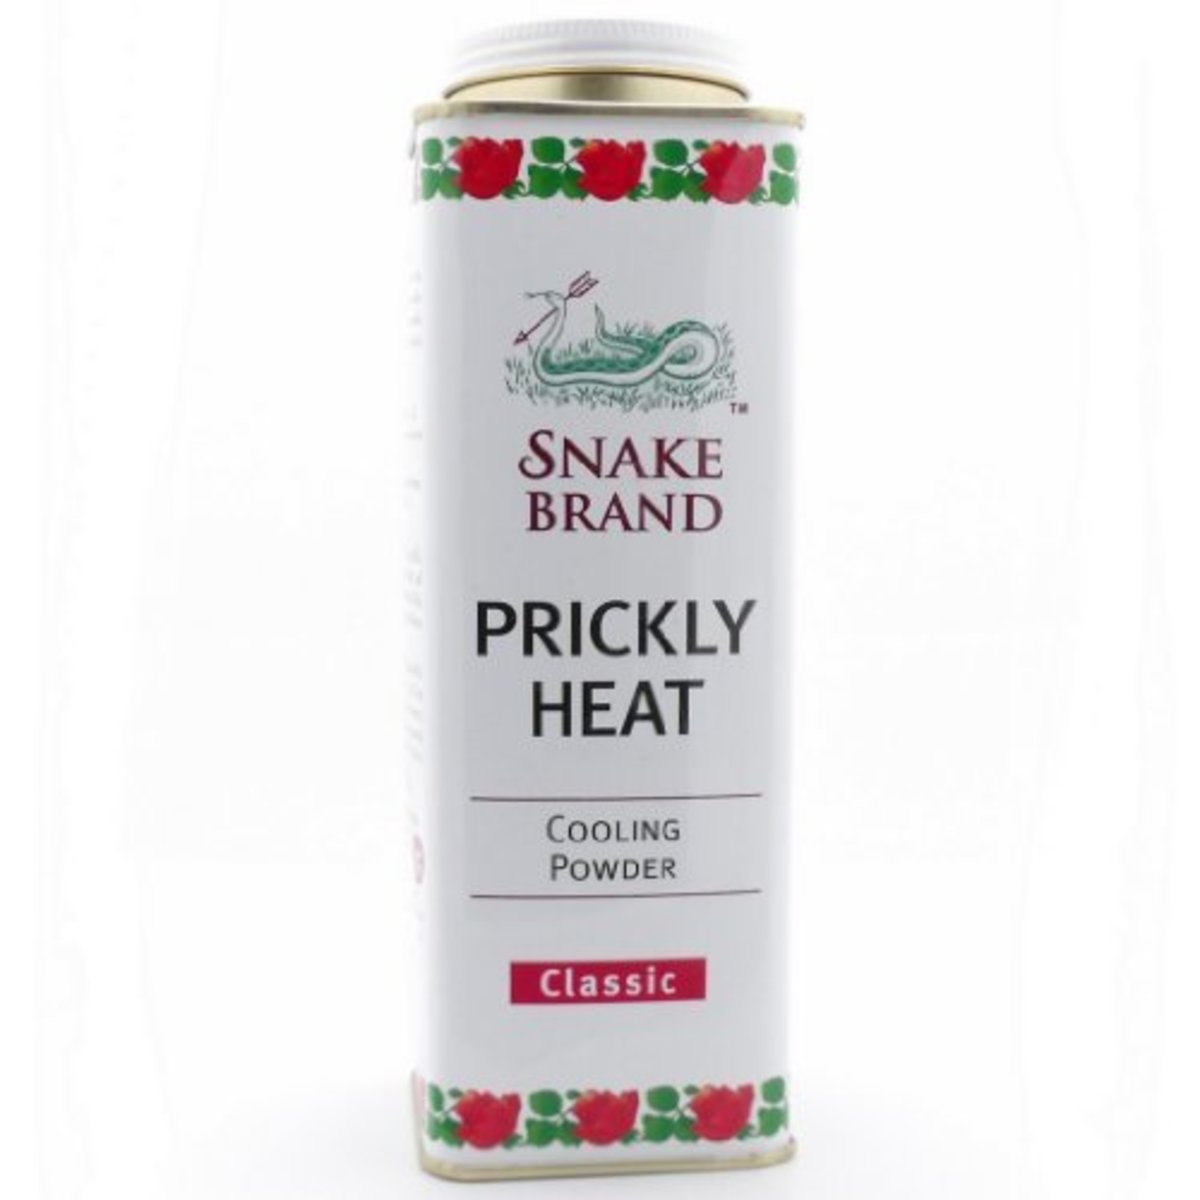 Snake Brand Prickly Heat